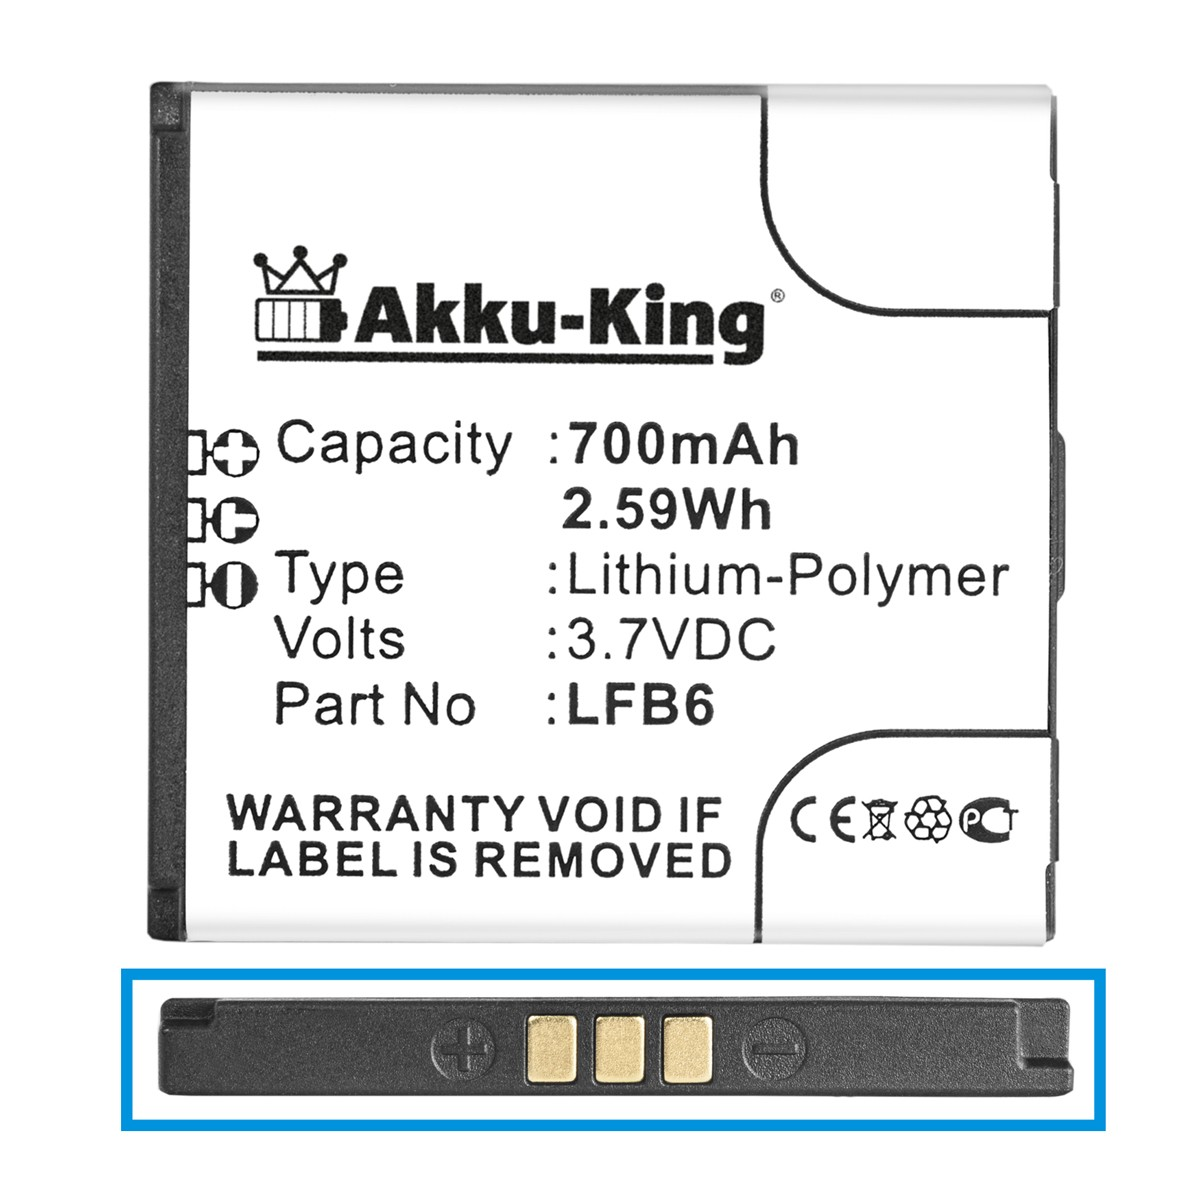 AKKU-KING Akku kompatibel mit Kazam Handy-Akku, 3.7 LFB6 Li-Ion Volt, 700mAh